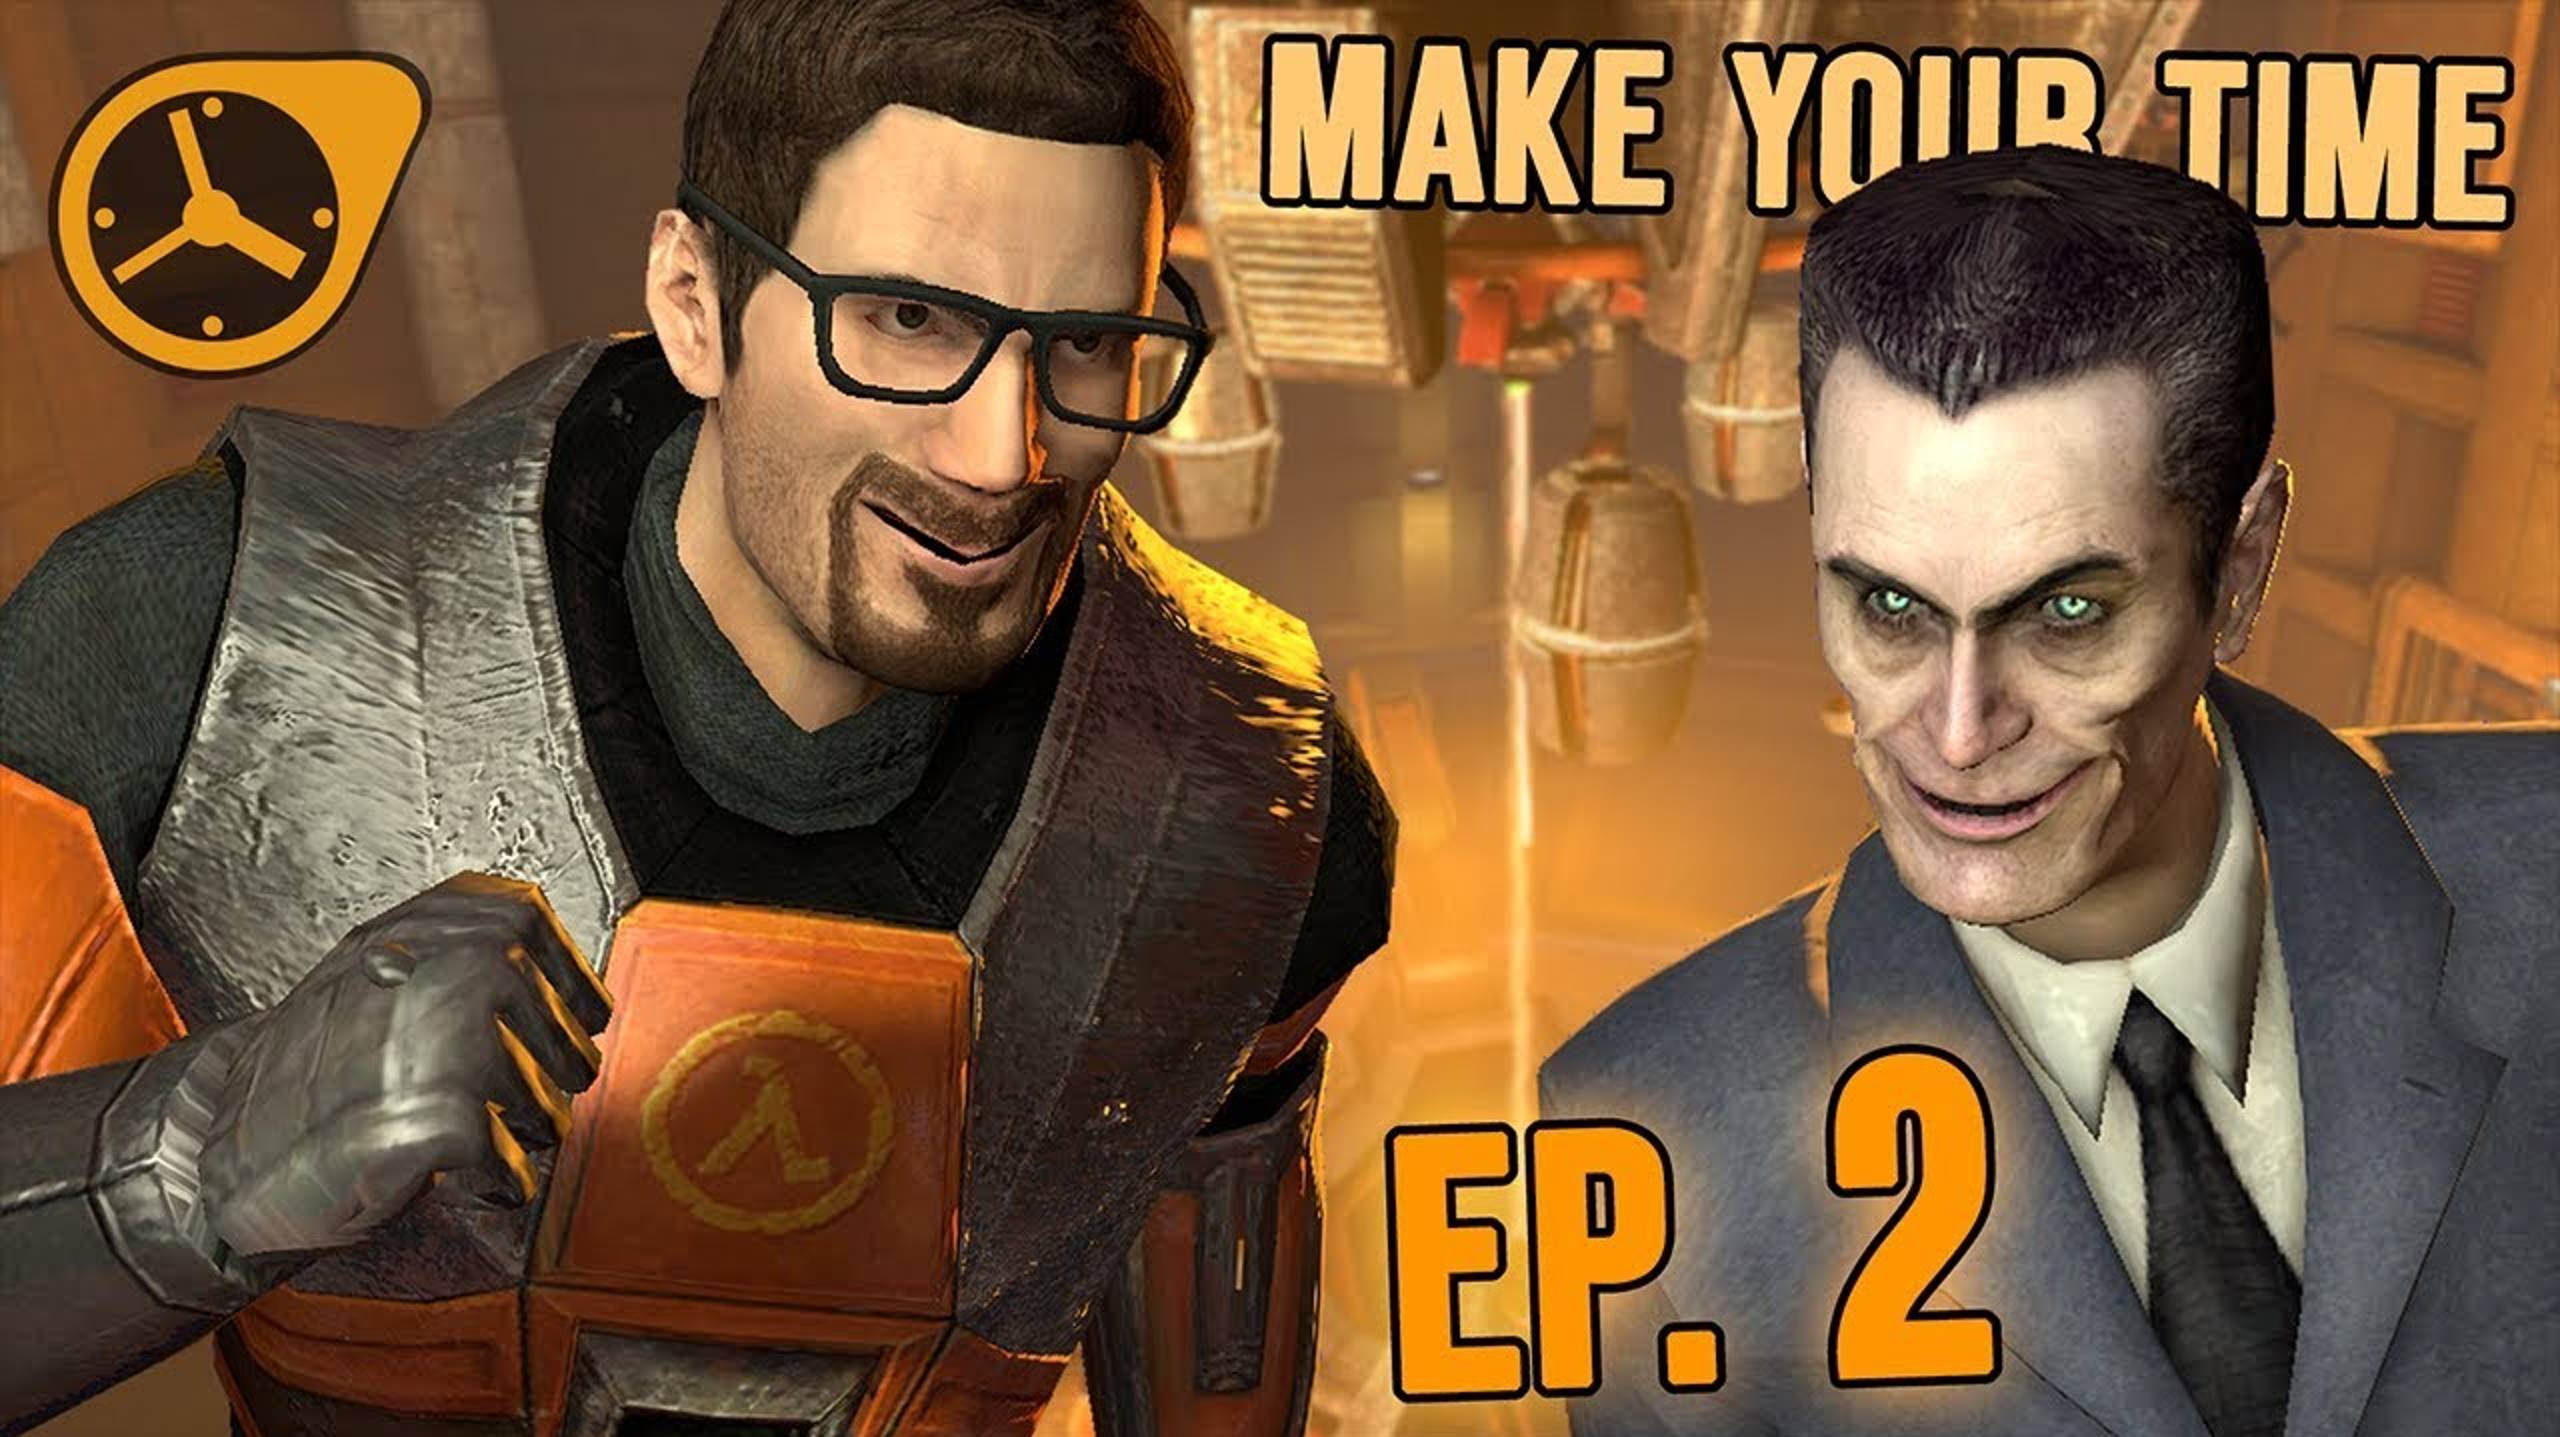 [SFM] Make Your Time - Episode 2: Anomalous Job (Half-Life/Black Mesa Machinima Series)